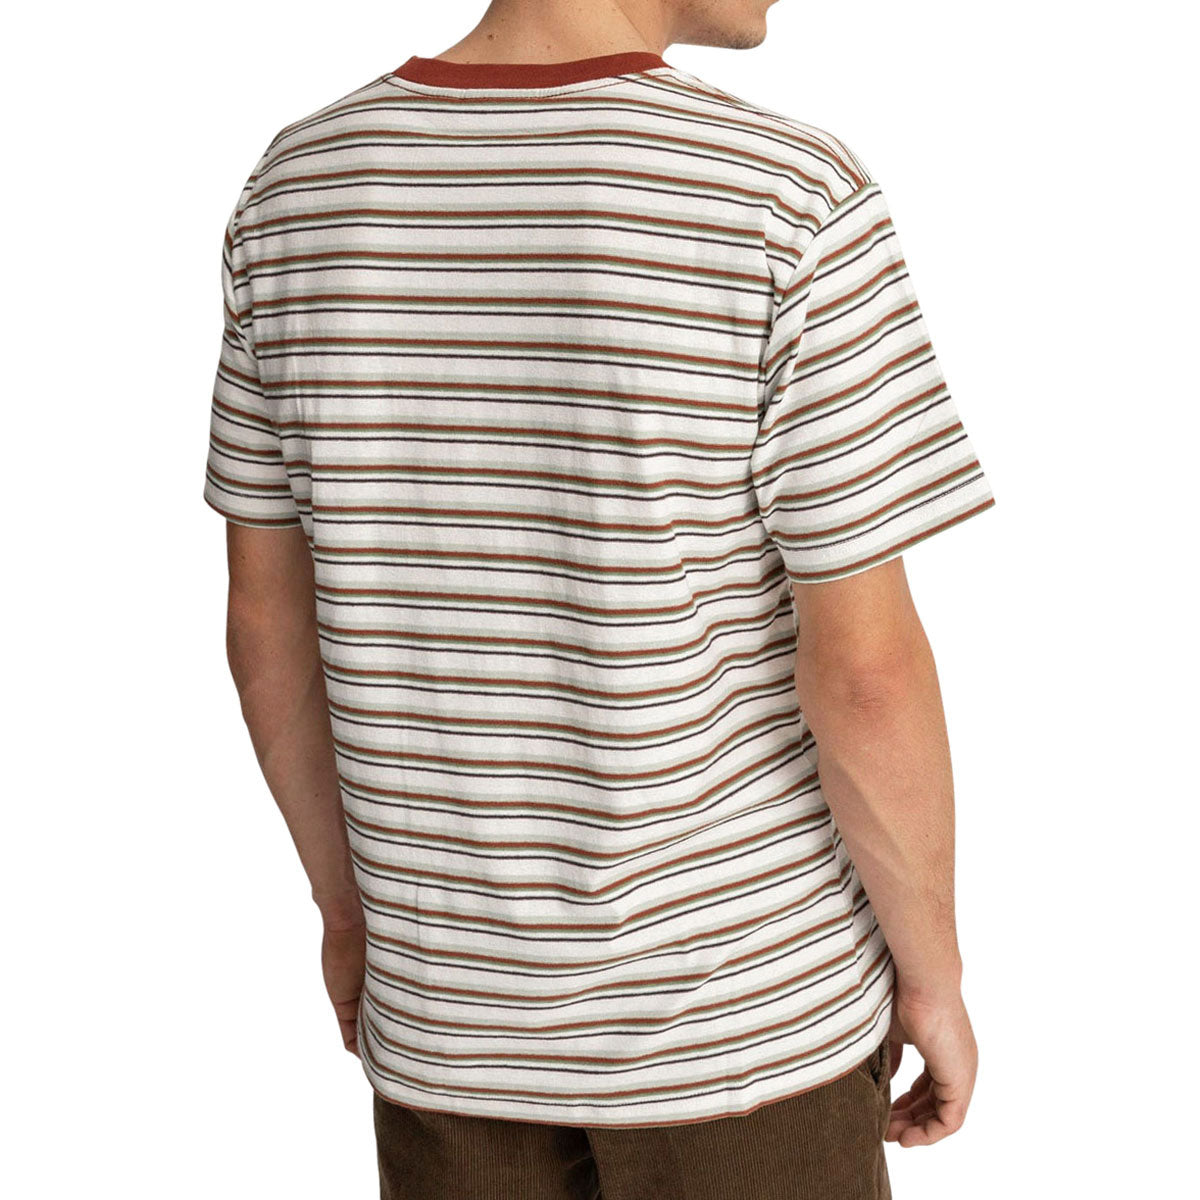 Rhythm Everyday Stripe T-Shirt - Natural/Natural image 3